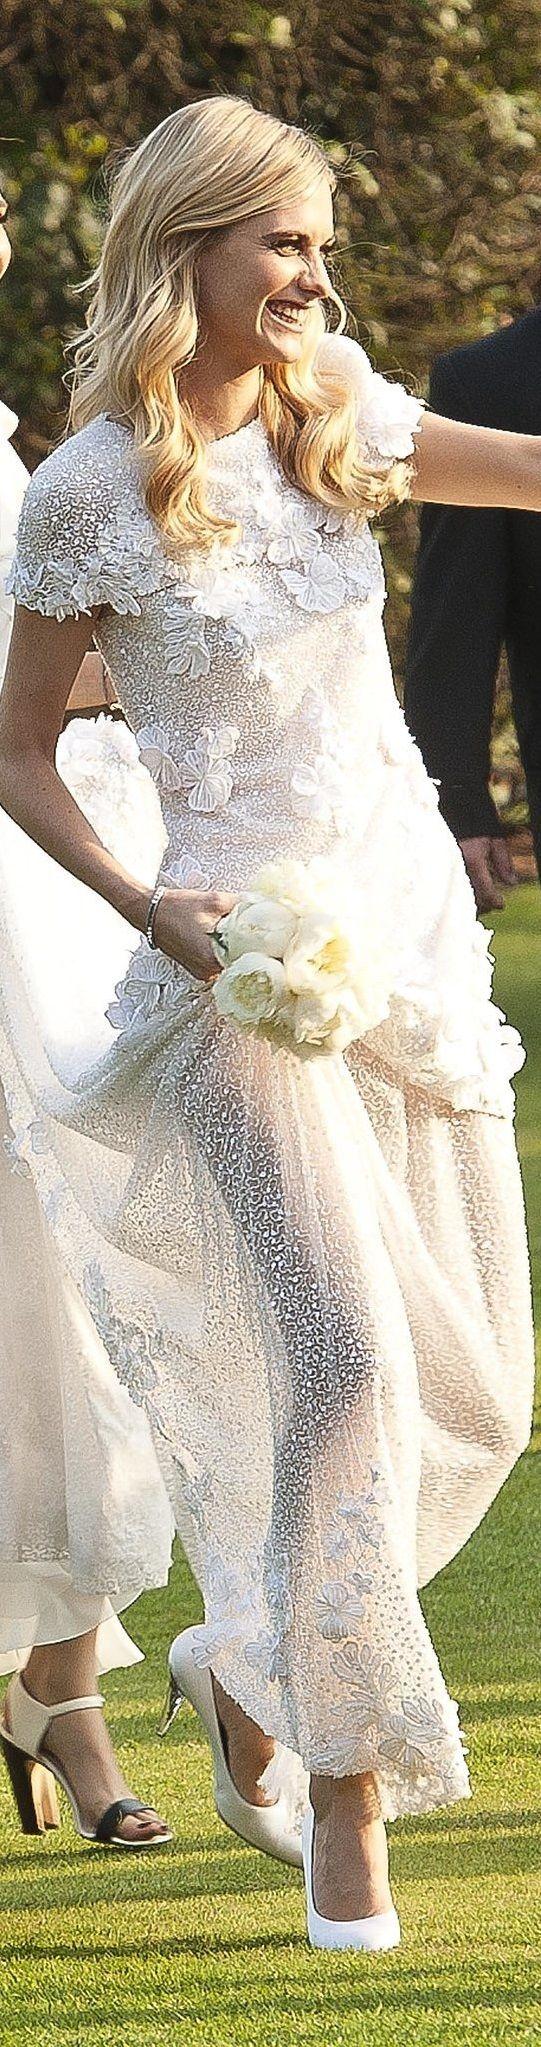 زفاف - Wedding Dresses All Things Wedding